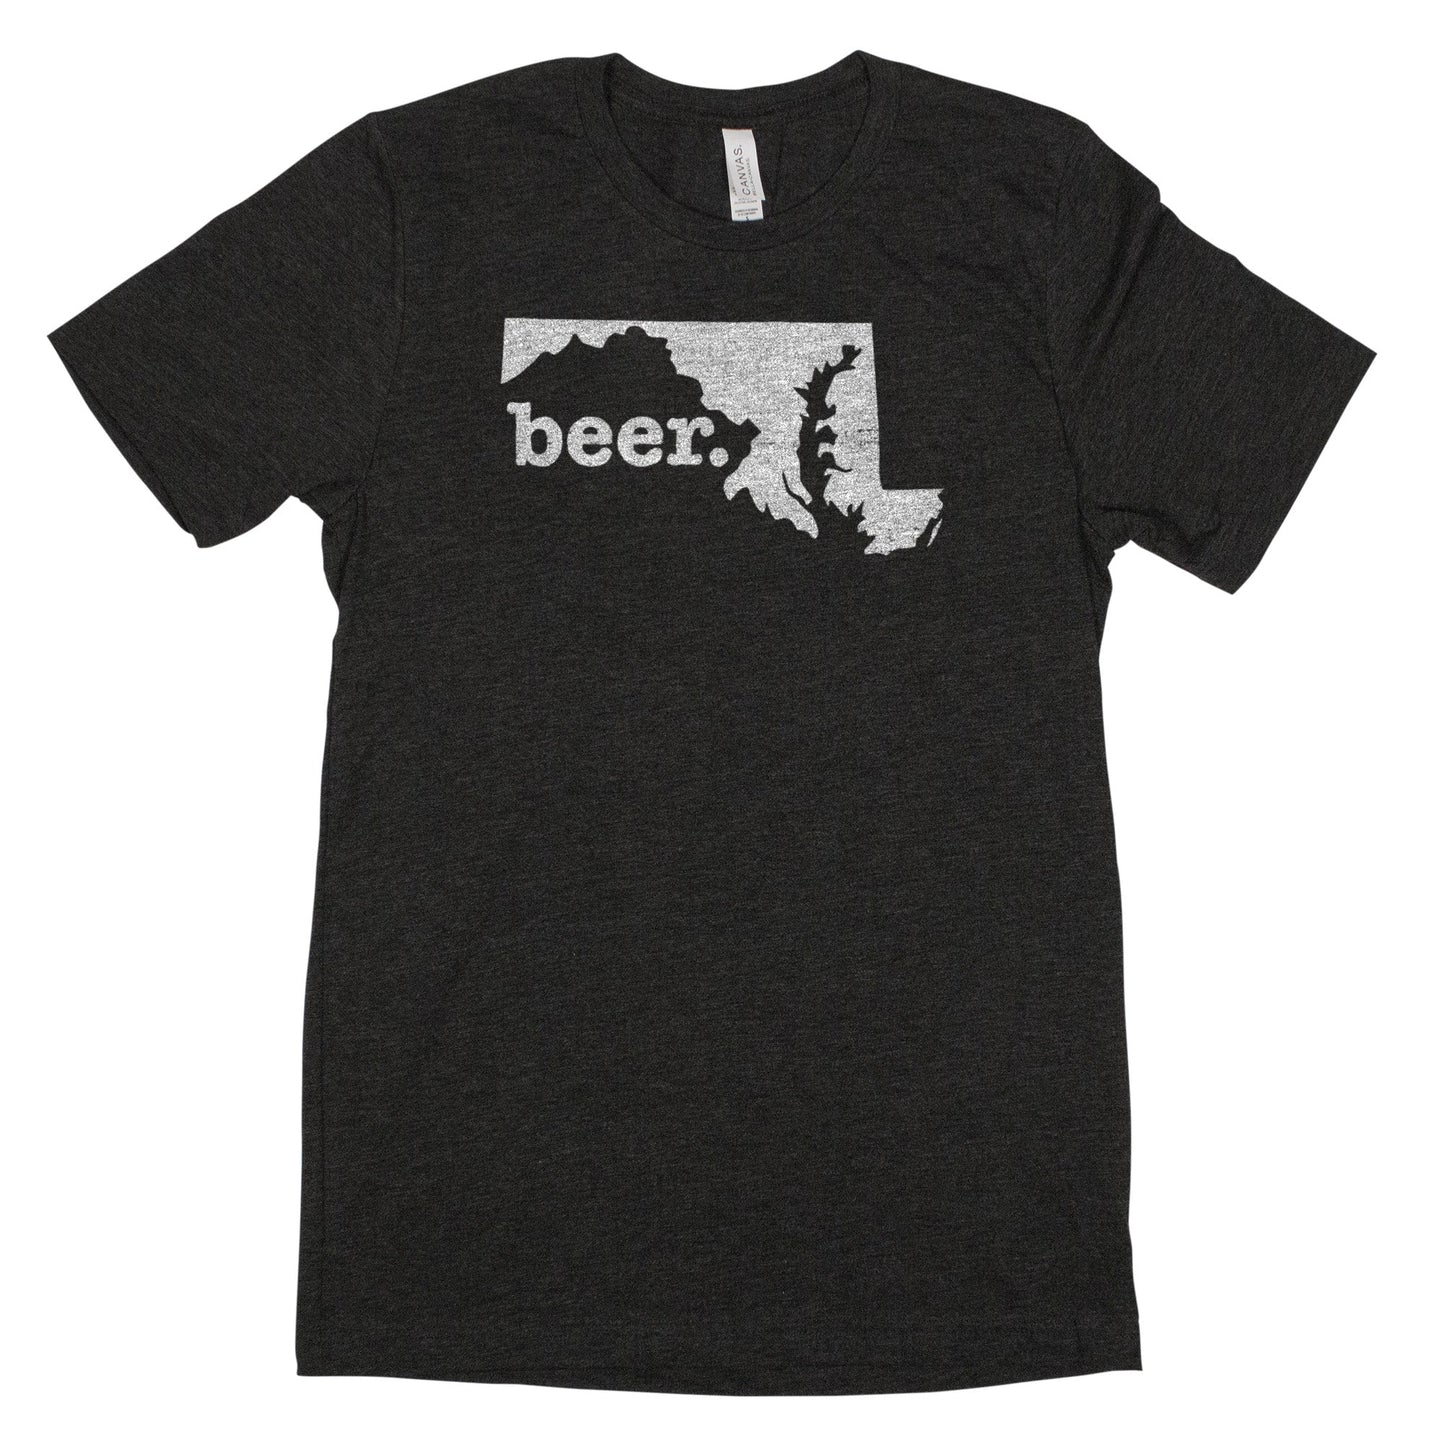 beer. Men's Unisex T-Shirt - Maryland